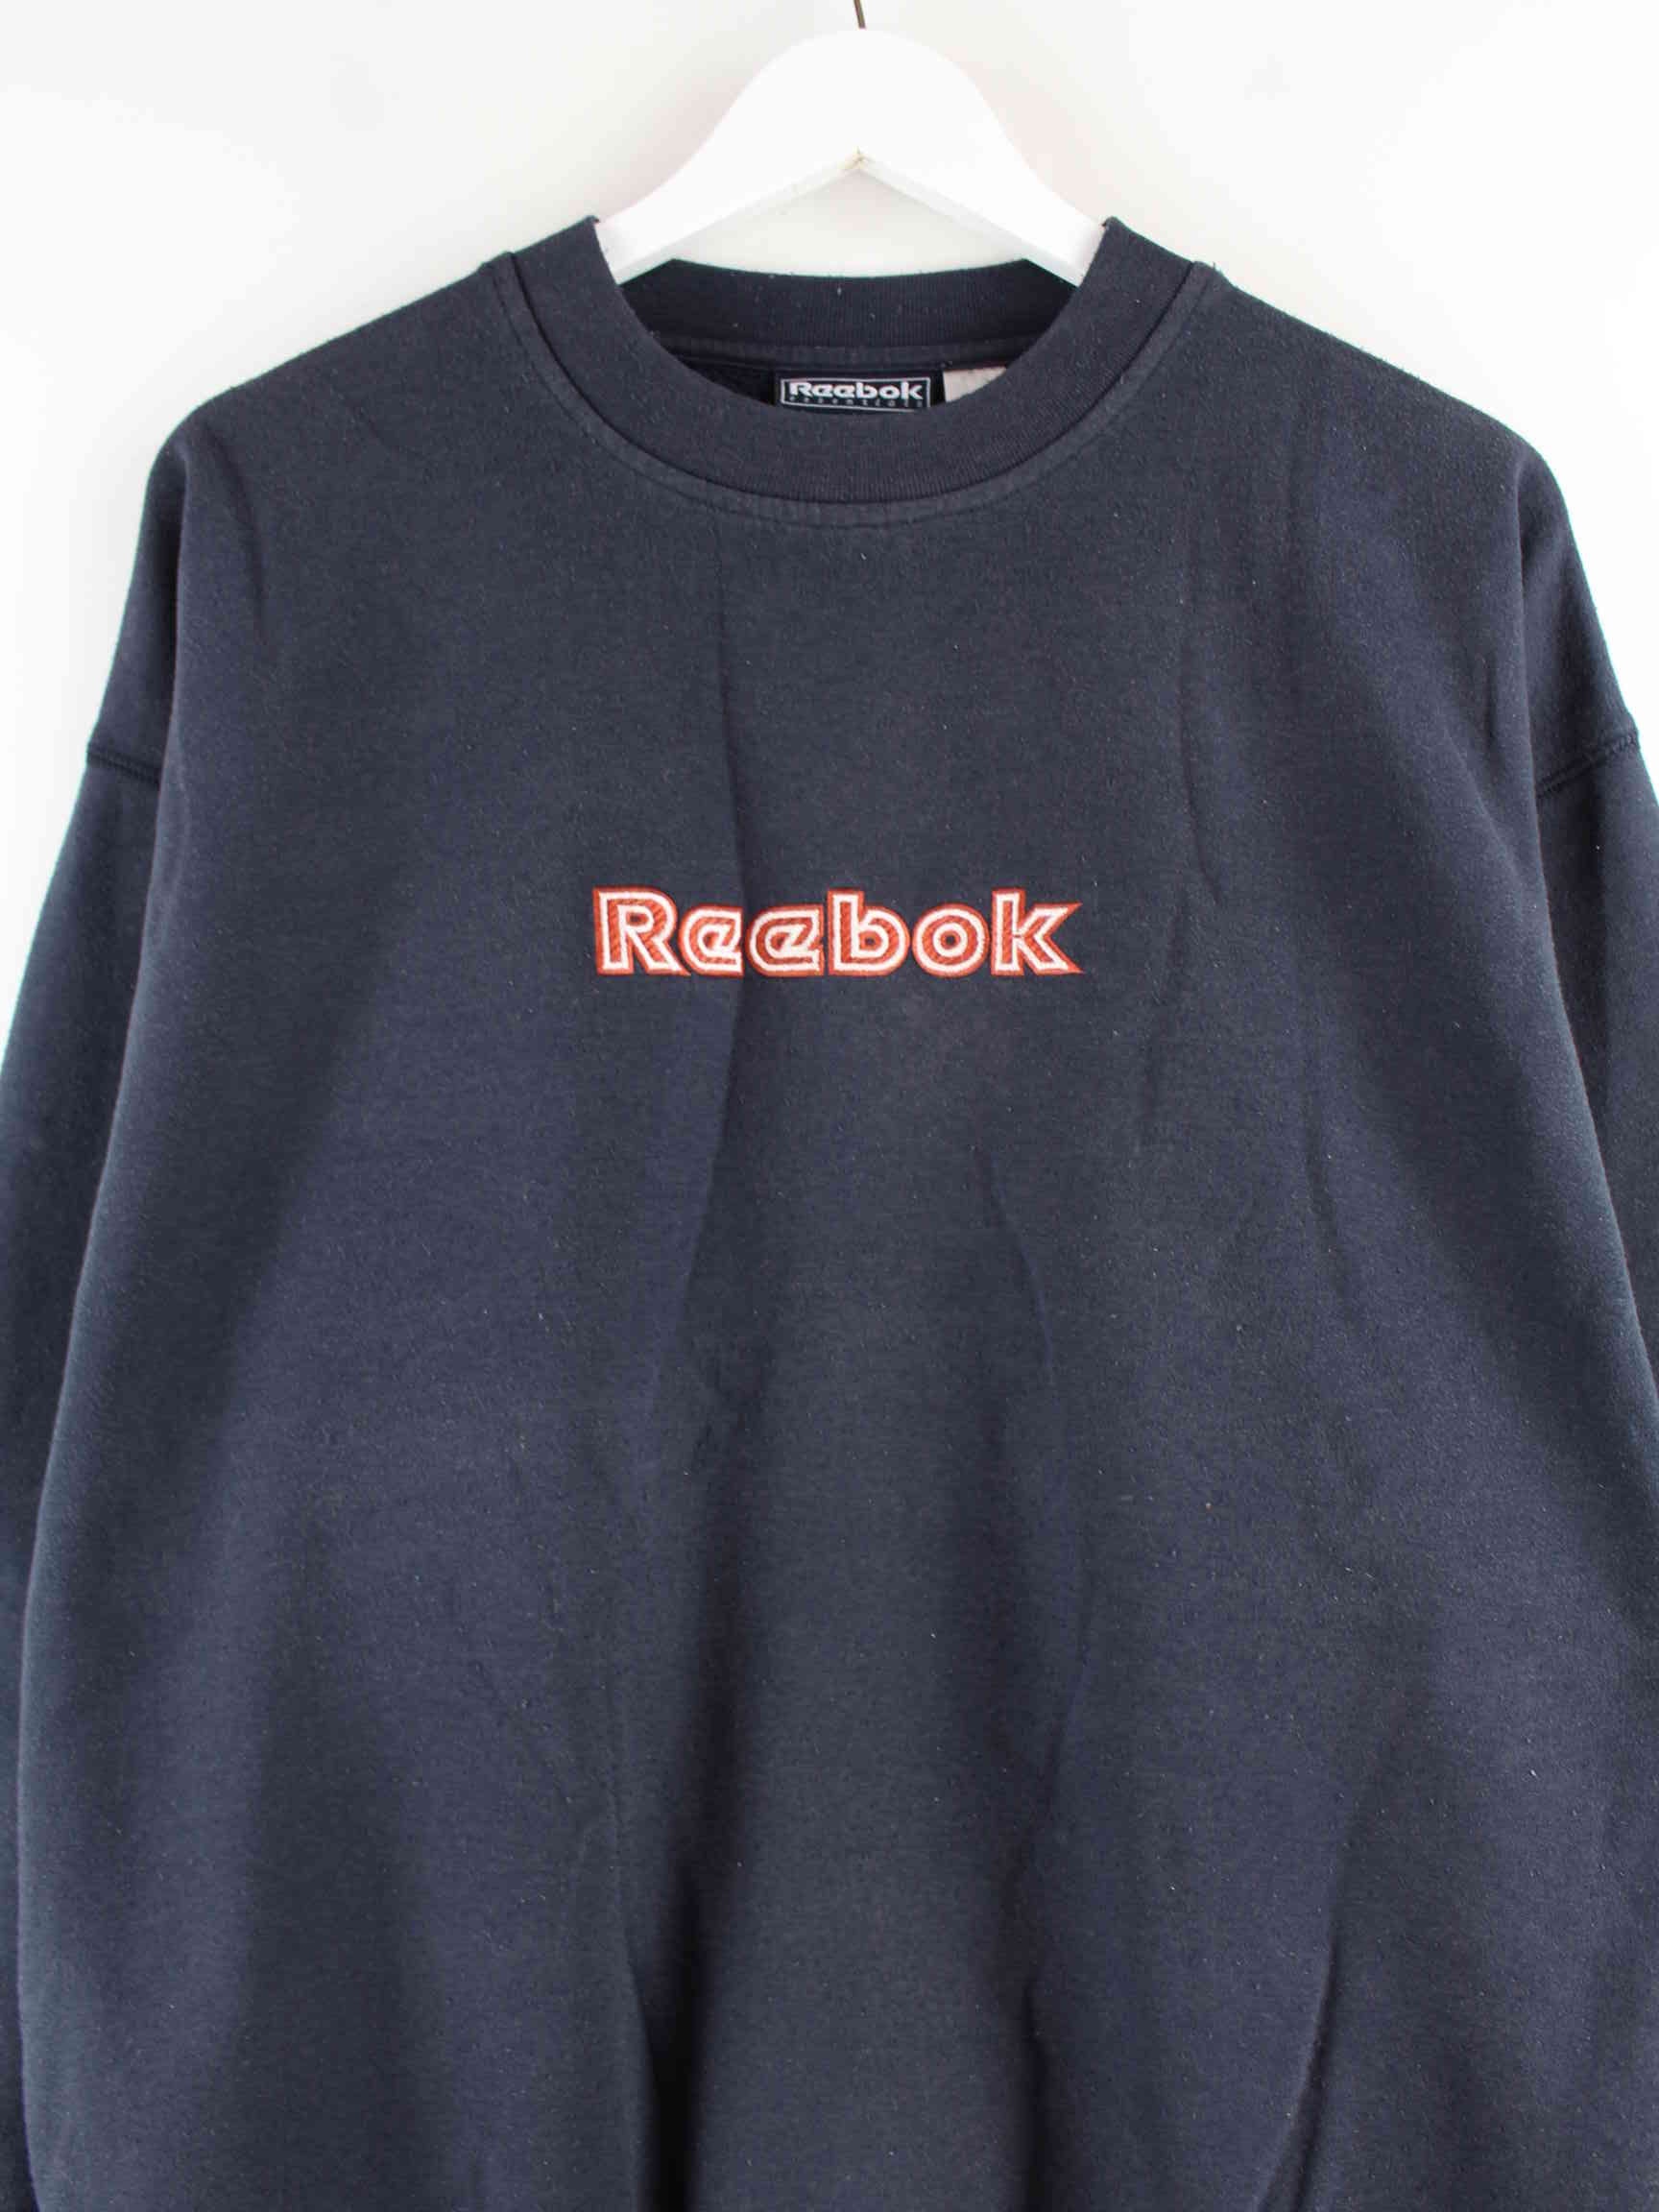 Reebok Embroidered Sweater Blau XL (detail image 1)